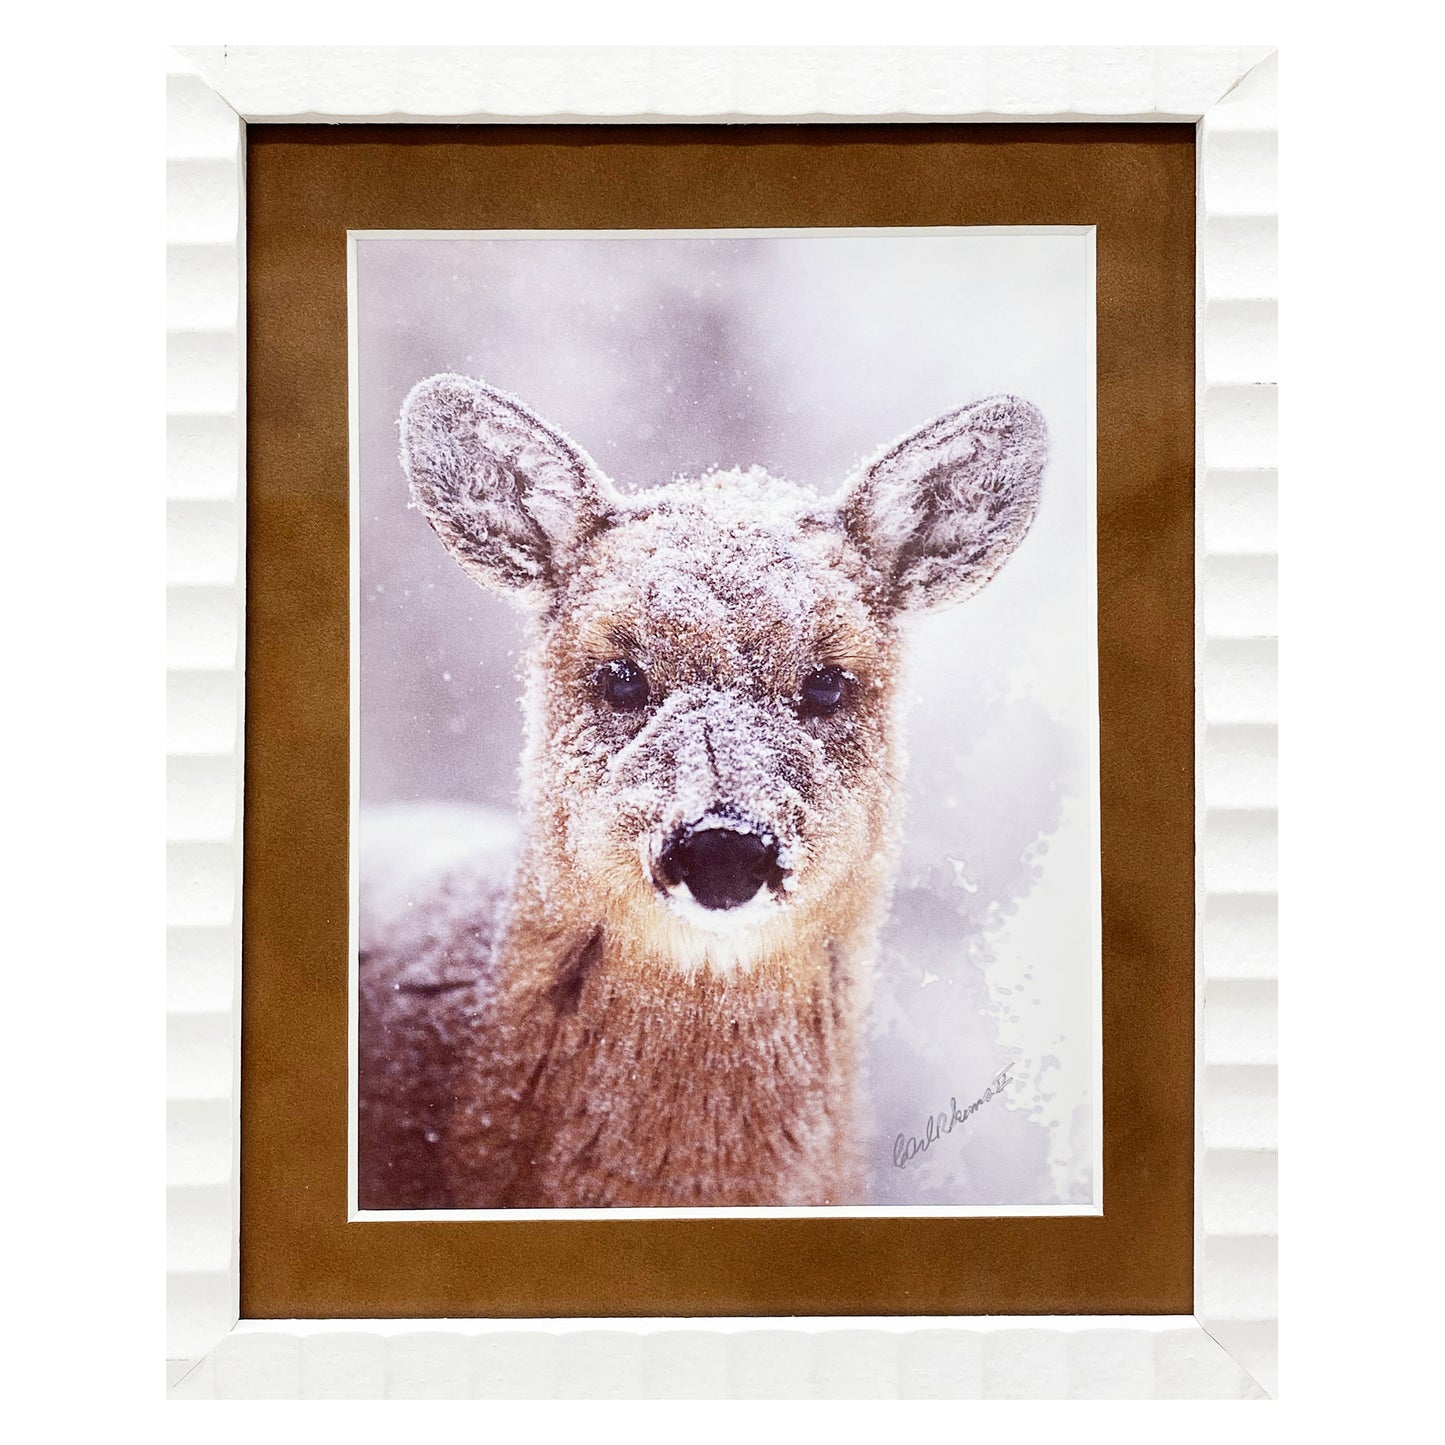 Snow Deer Framed Photograph by Carl Sams.